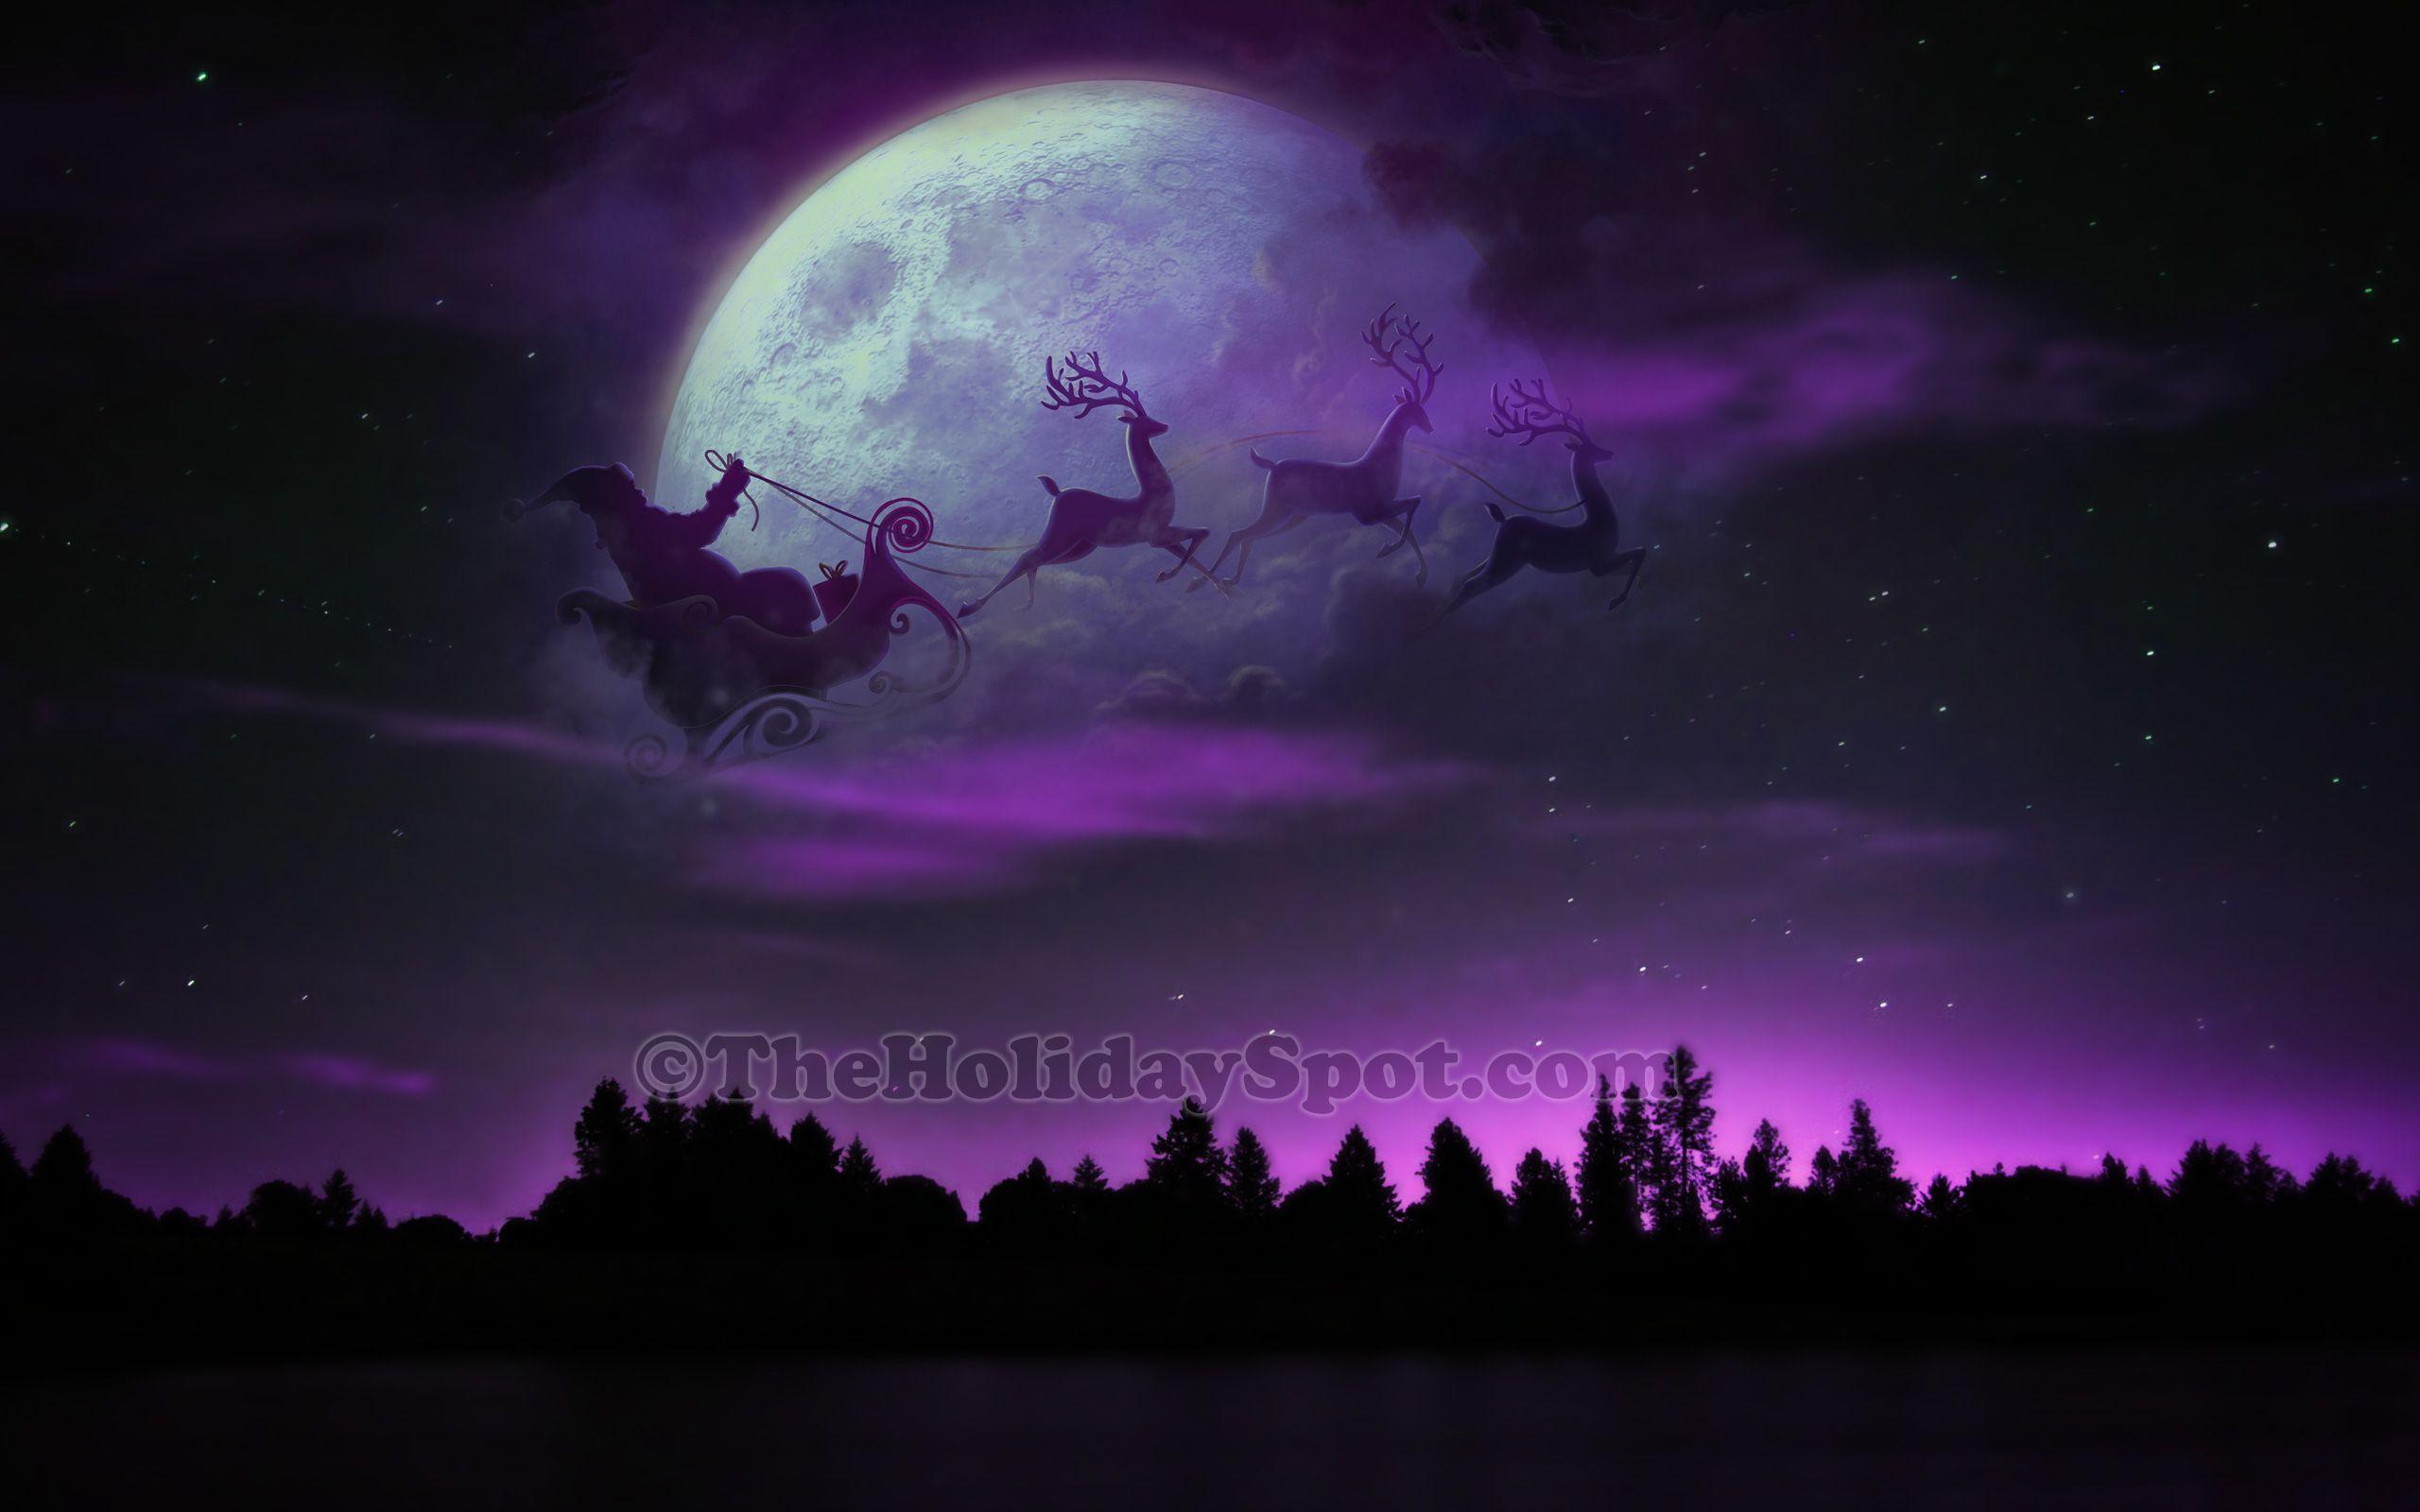 Christmas HD 1080p Wallpaper. Download Christmas HD Wallpaper. Christmas Background Image